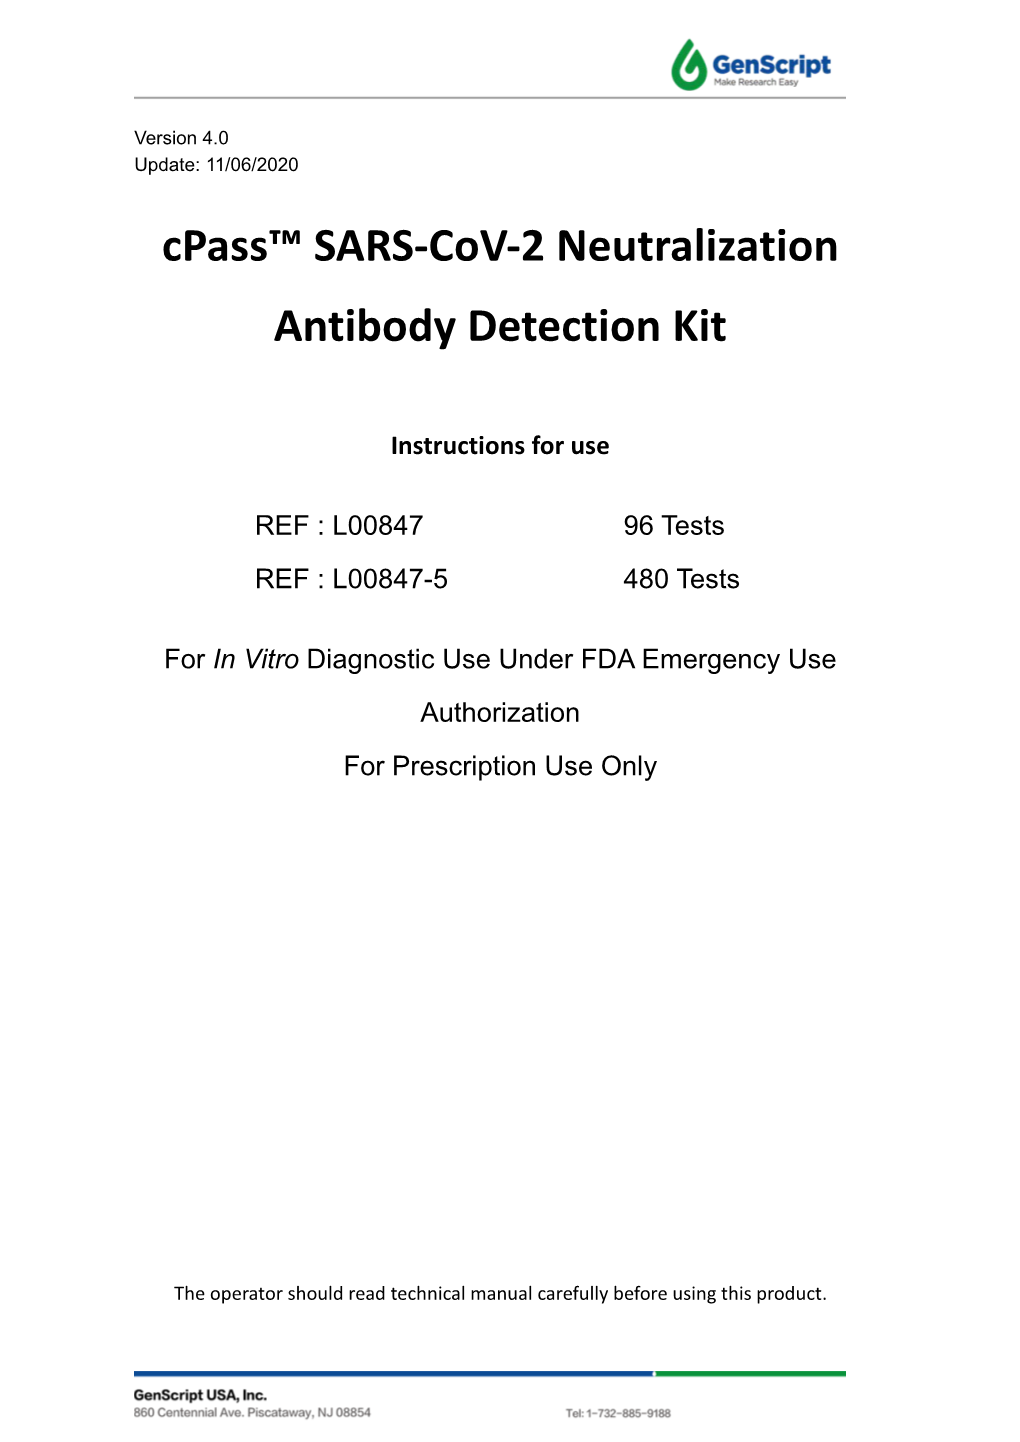 Cpass™ SARS-Cov-2 Neutralization Antibody Detection Kit